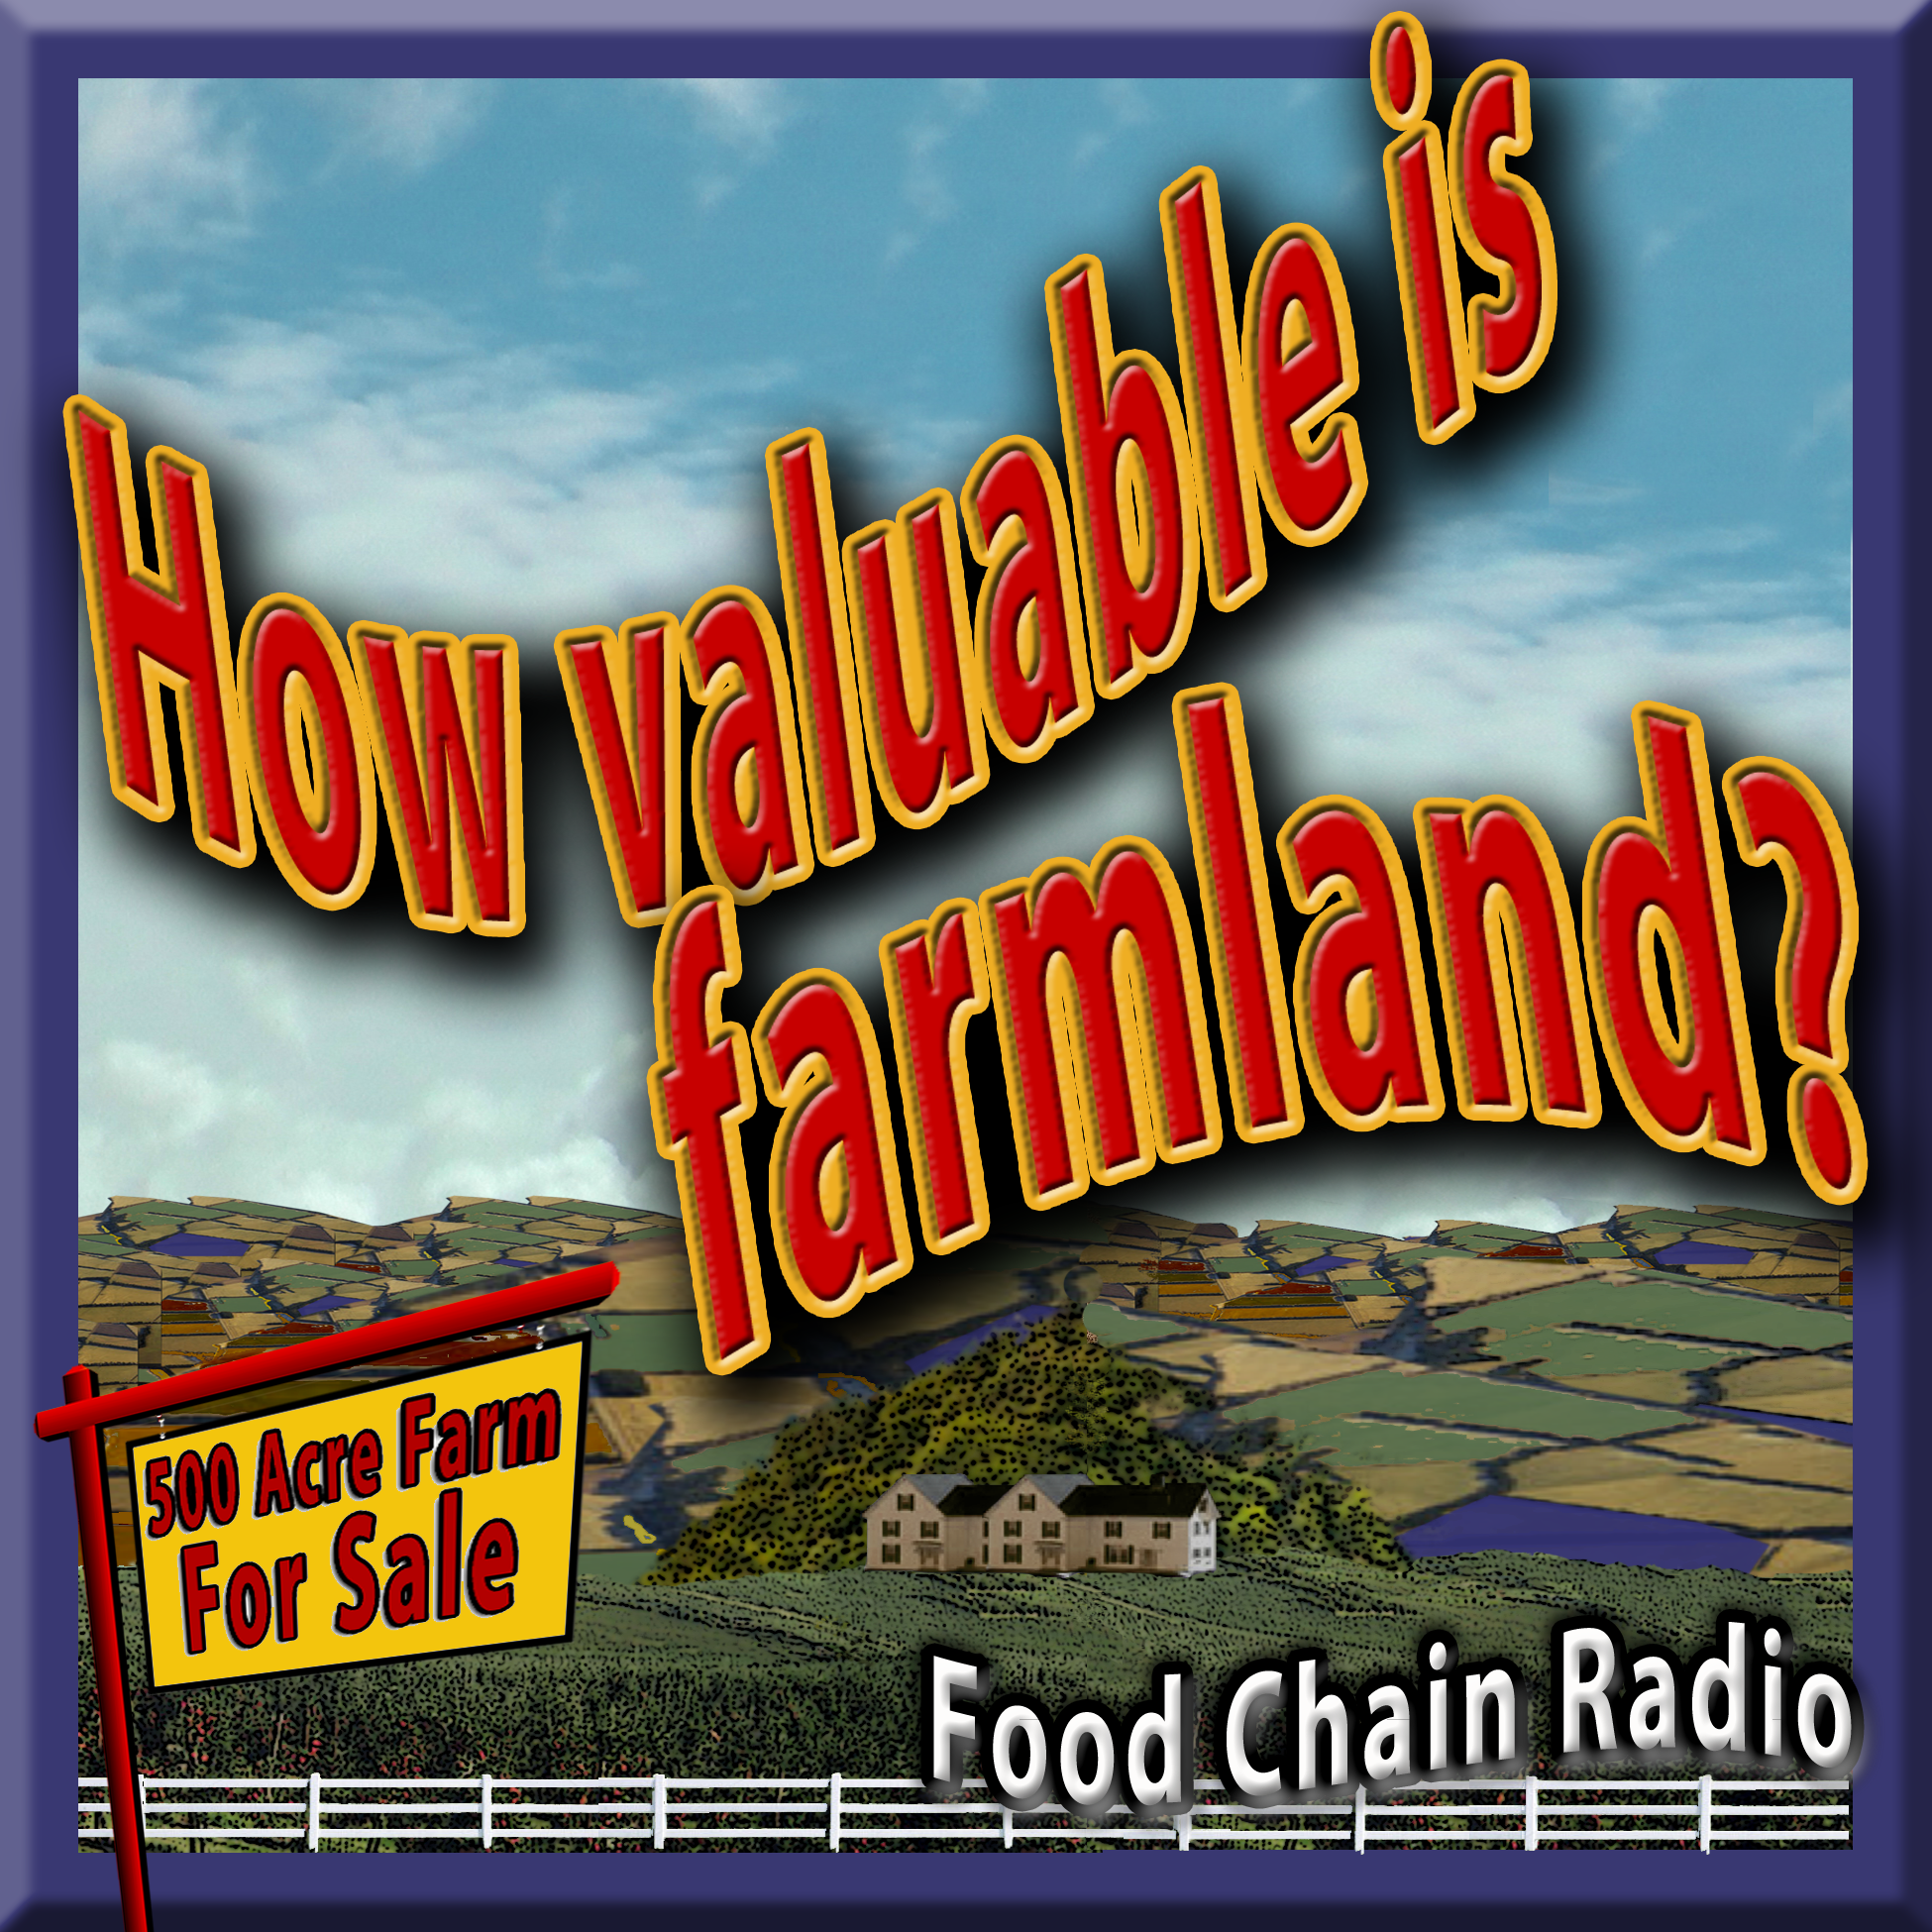 Michael Olson Food Chain Radio: What factors give farmland its value?